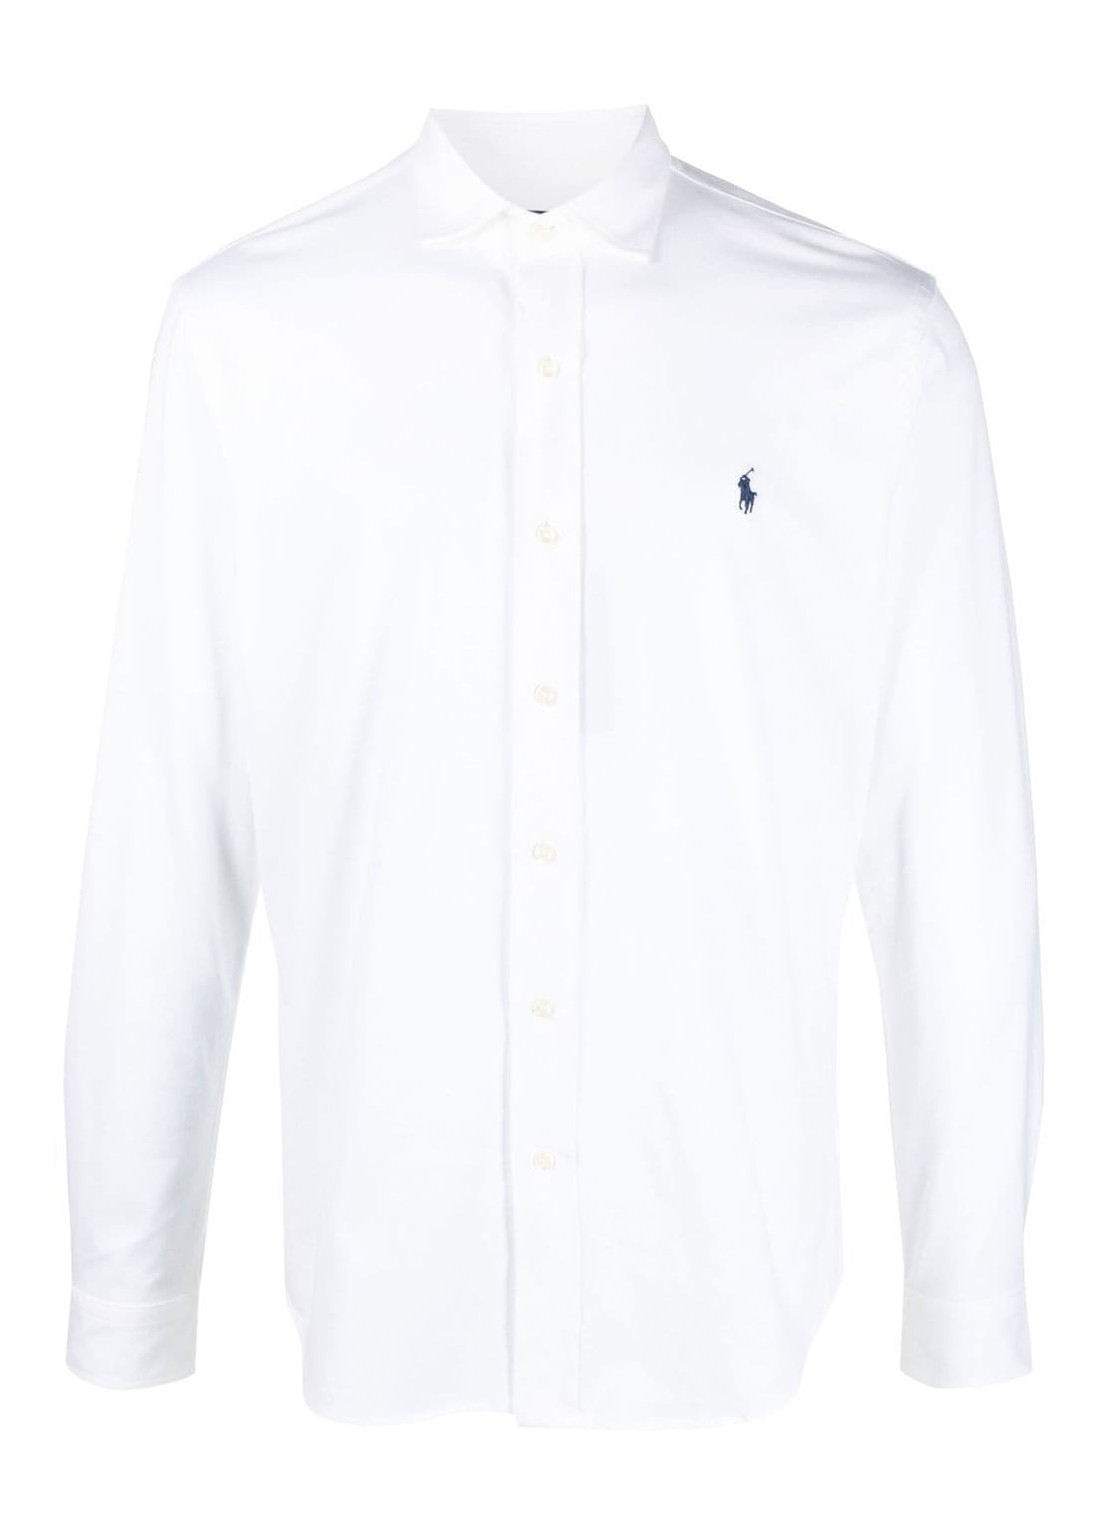 Camiseria polo ralph lauren shirt man lsfbestatem1-long sleeve-sport shirt 710899386001 white c7998 